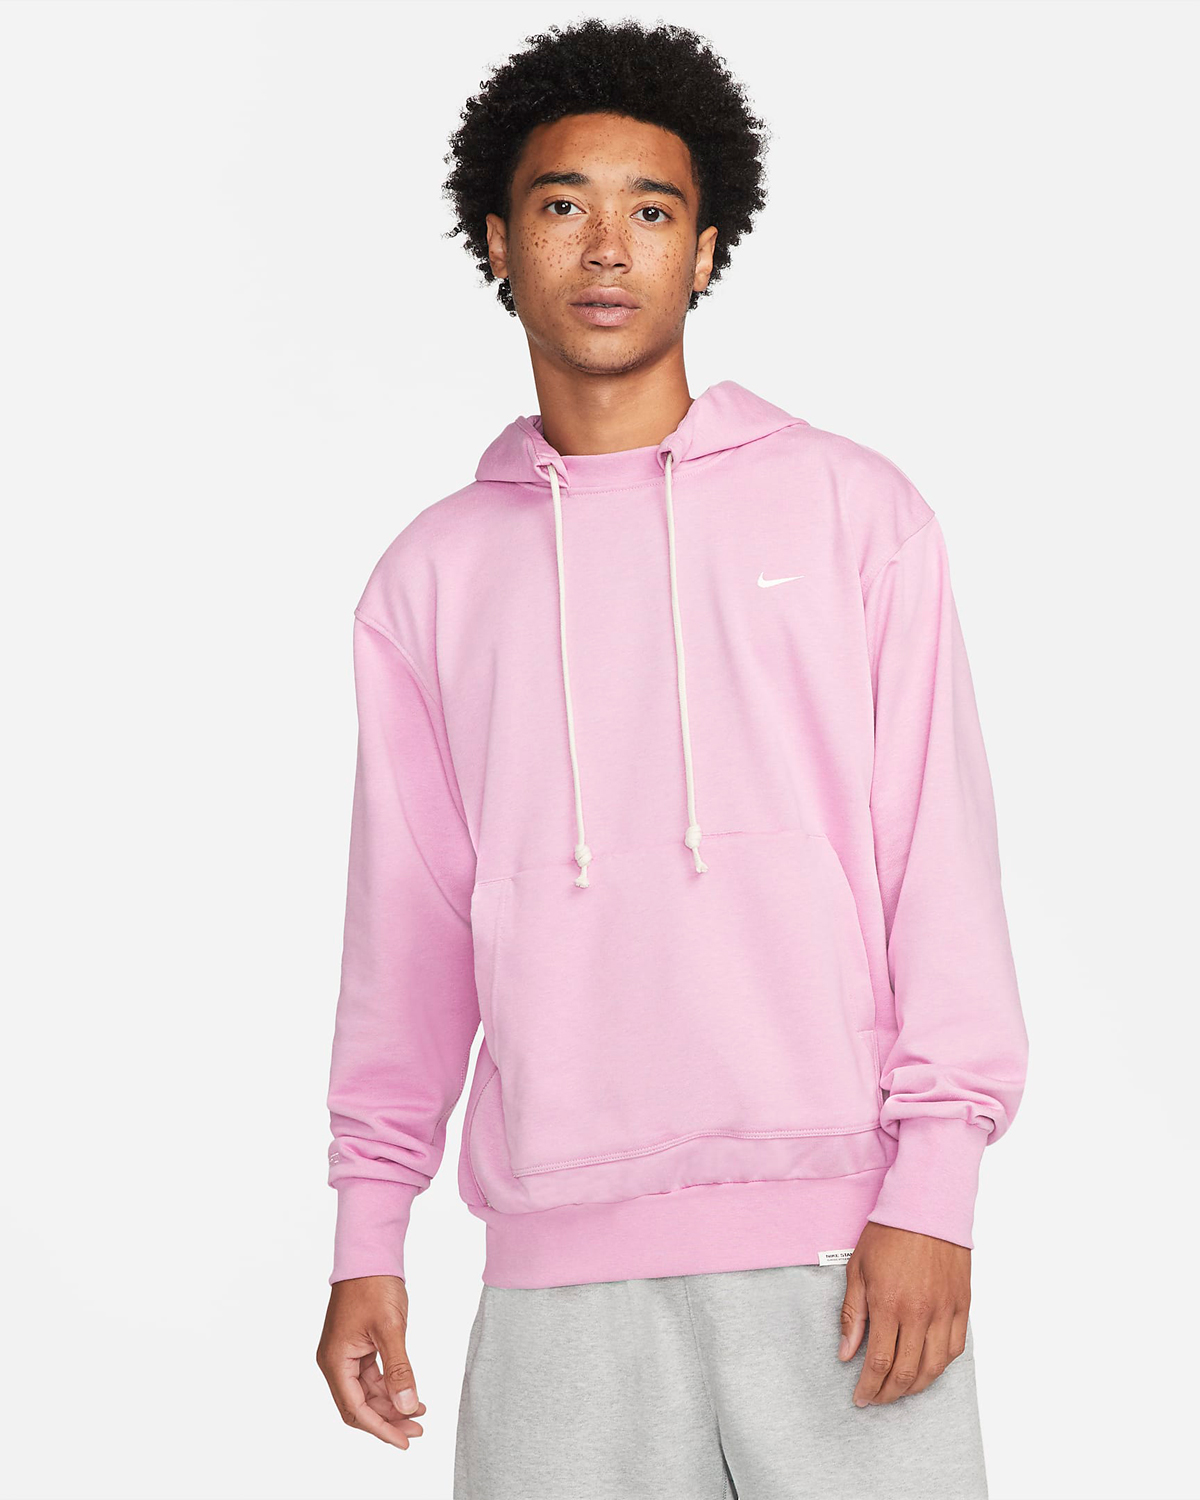 Nike-Standard-Issue-Hoodie-Orchid-Pink